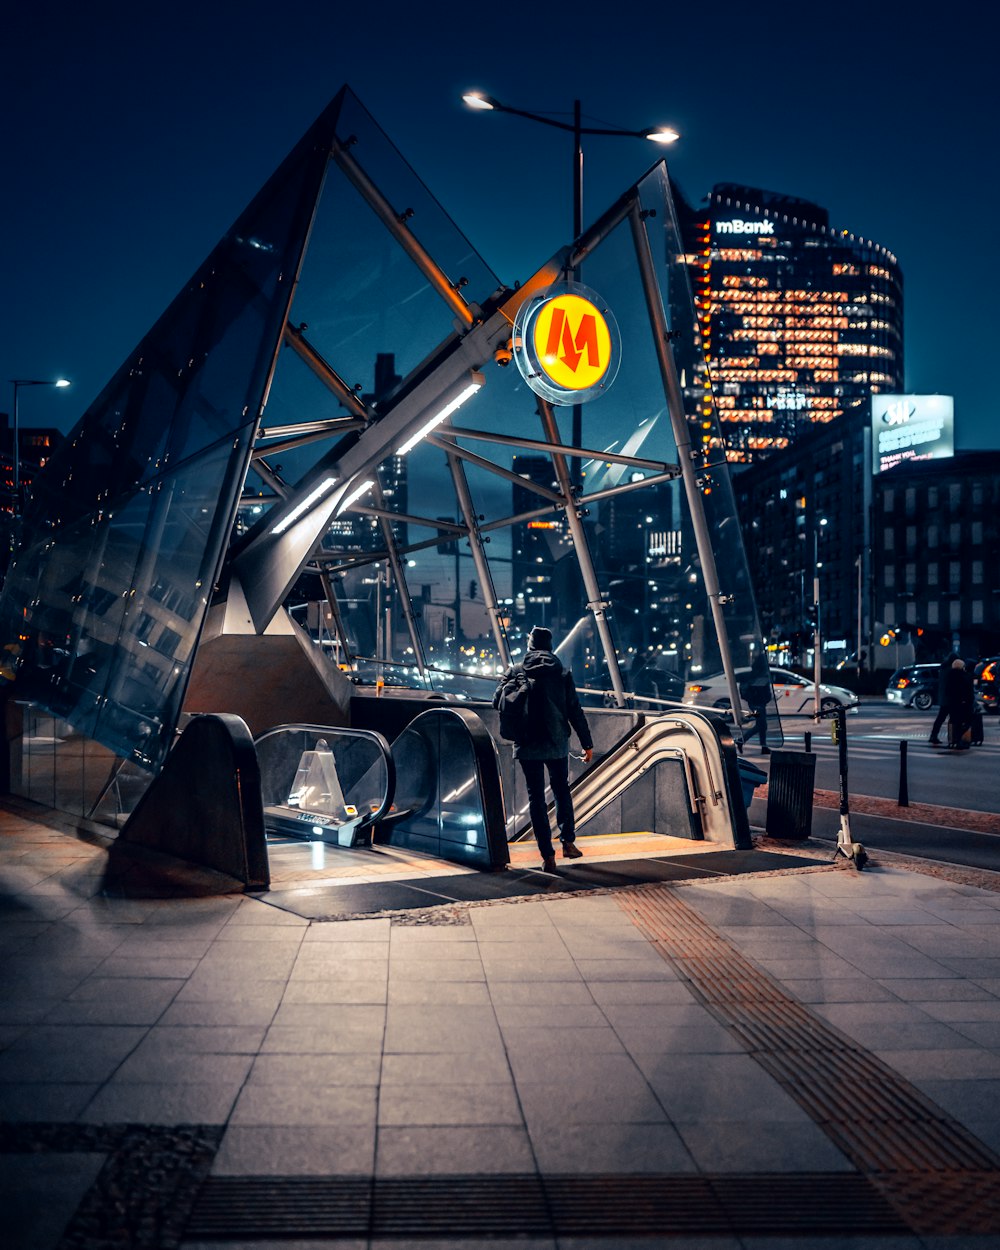 Un uomo è in piedi su una scala mobile in una città di notte